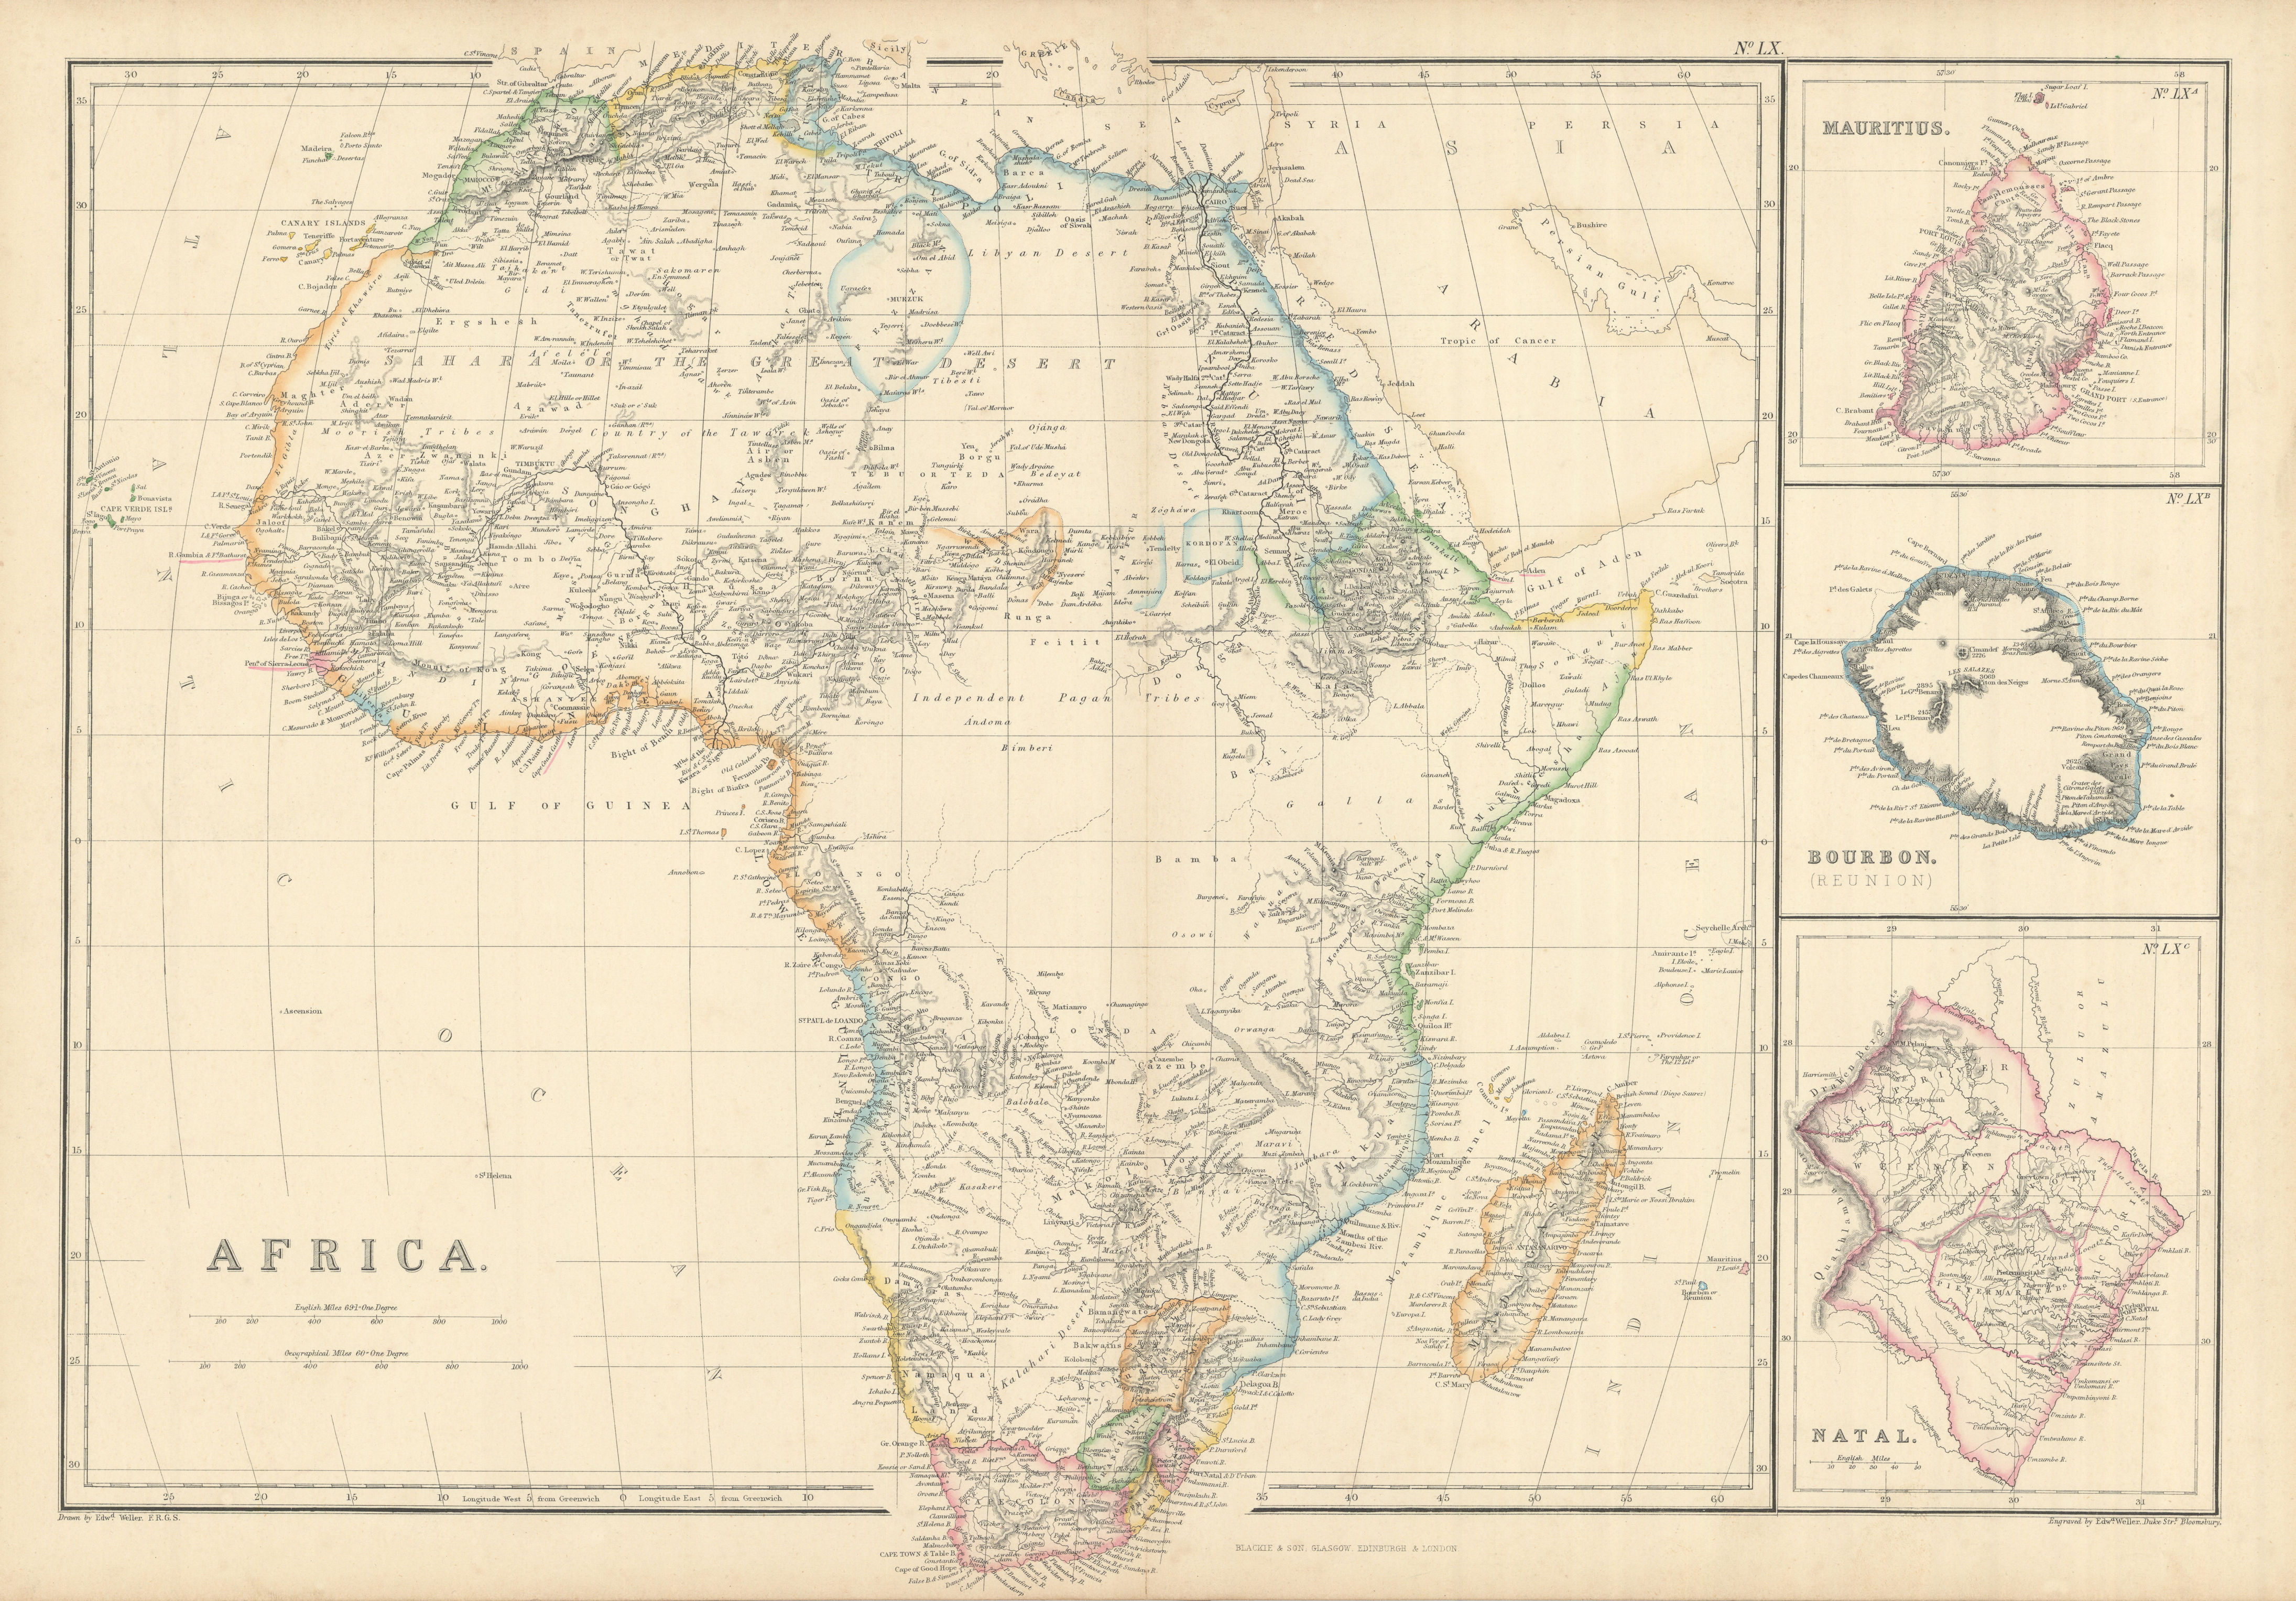 Associate Product Africa. Mauritius, Bourbon (Reunion) & Natal by Edward Weller 1860 old map